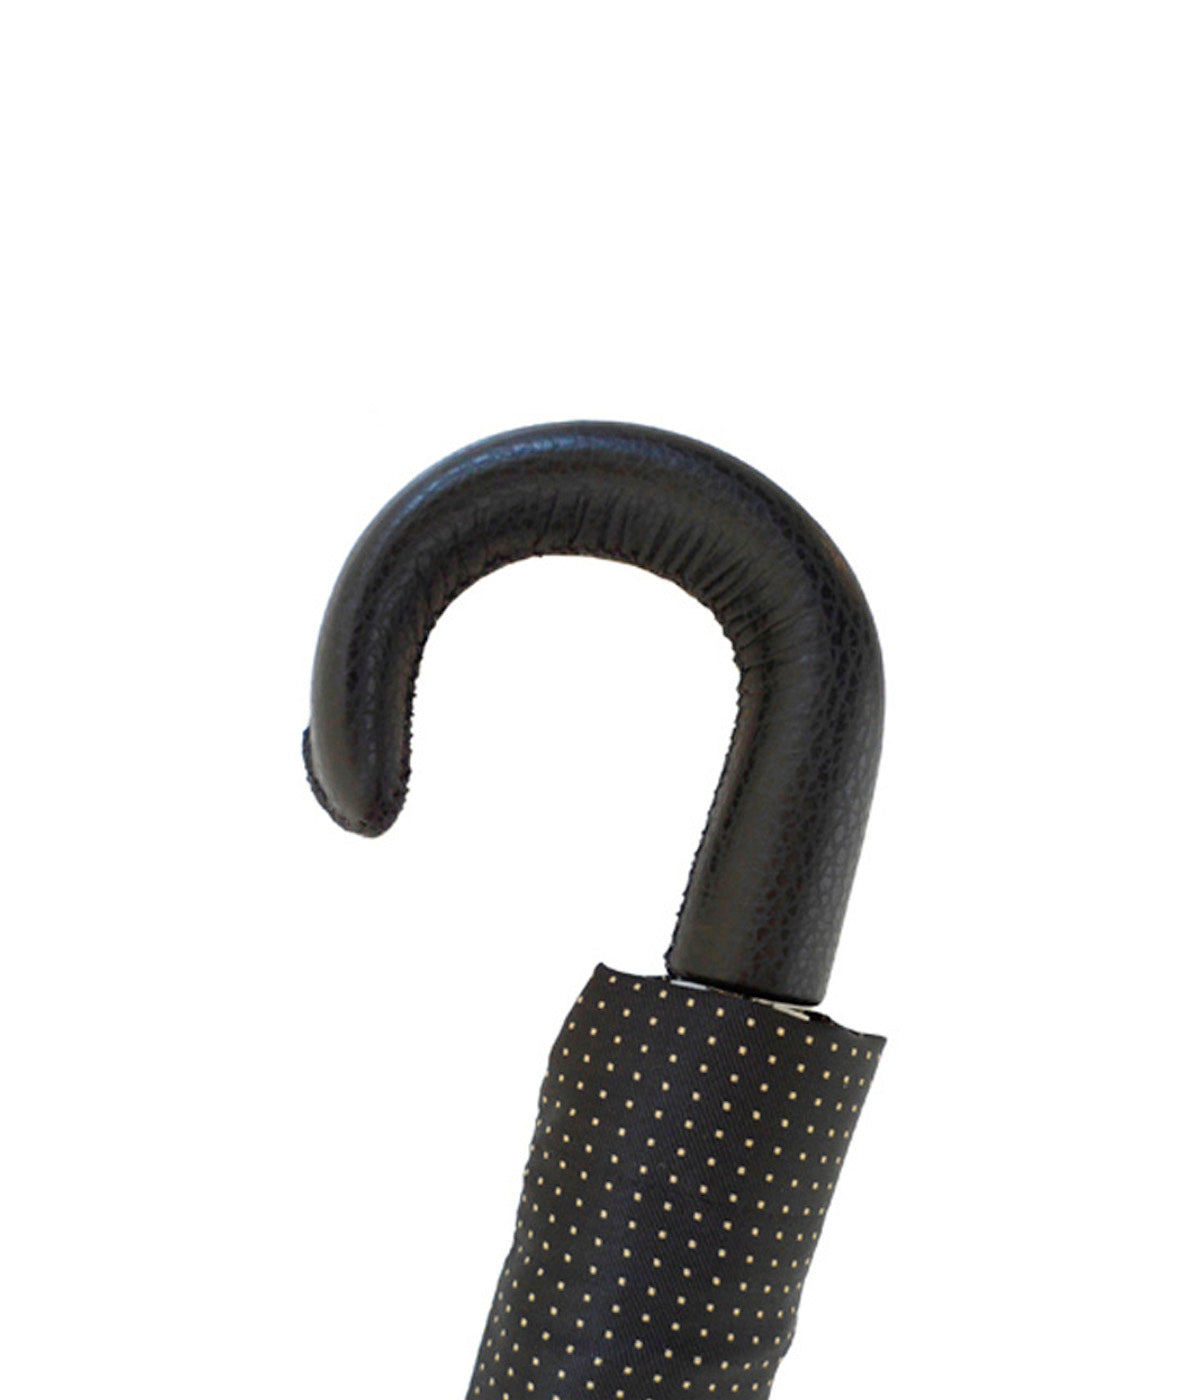 Short Folding Umbrella in Black Dot